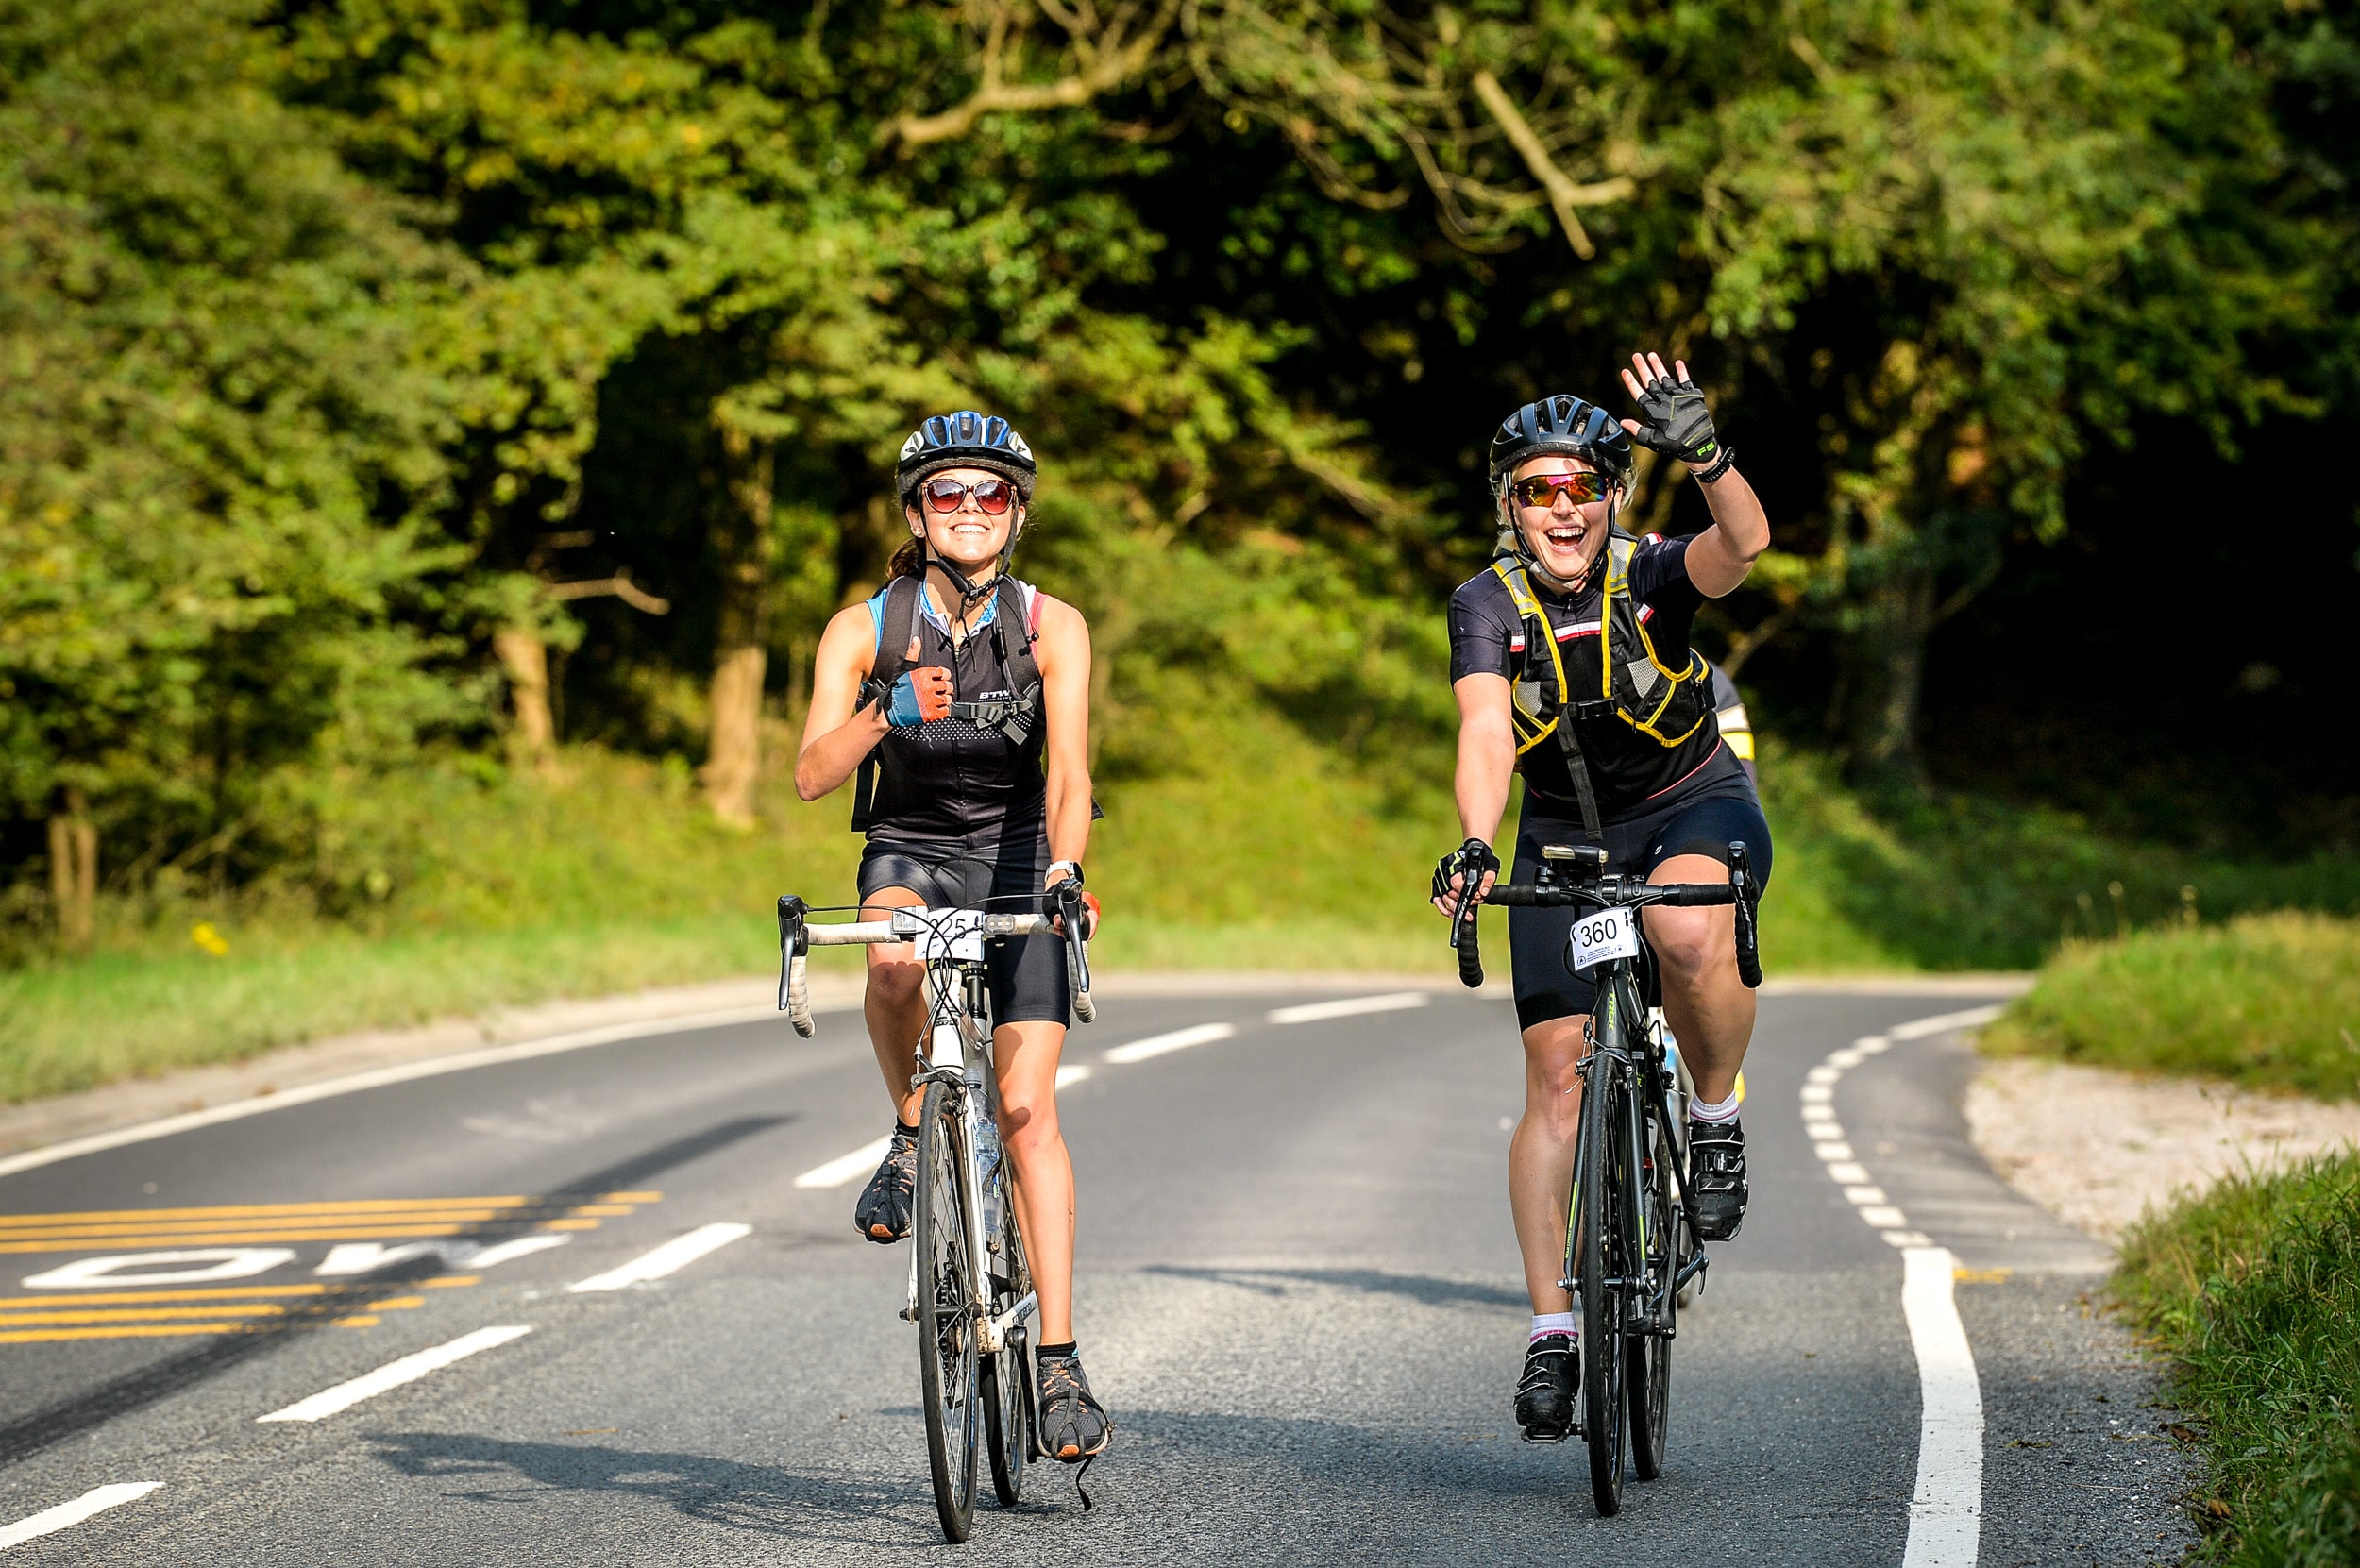 Two women riding a bike taking part in great weston ride